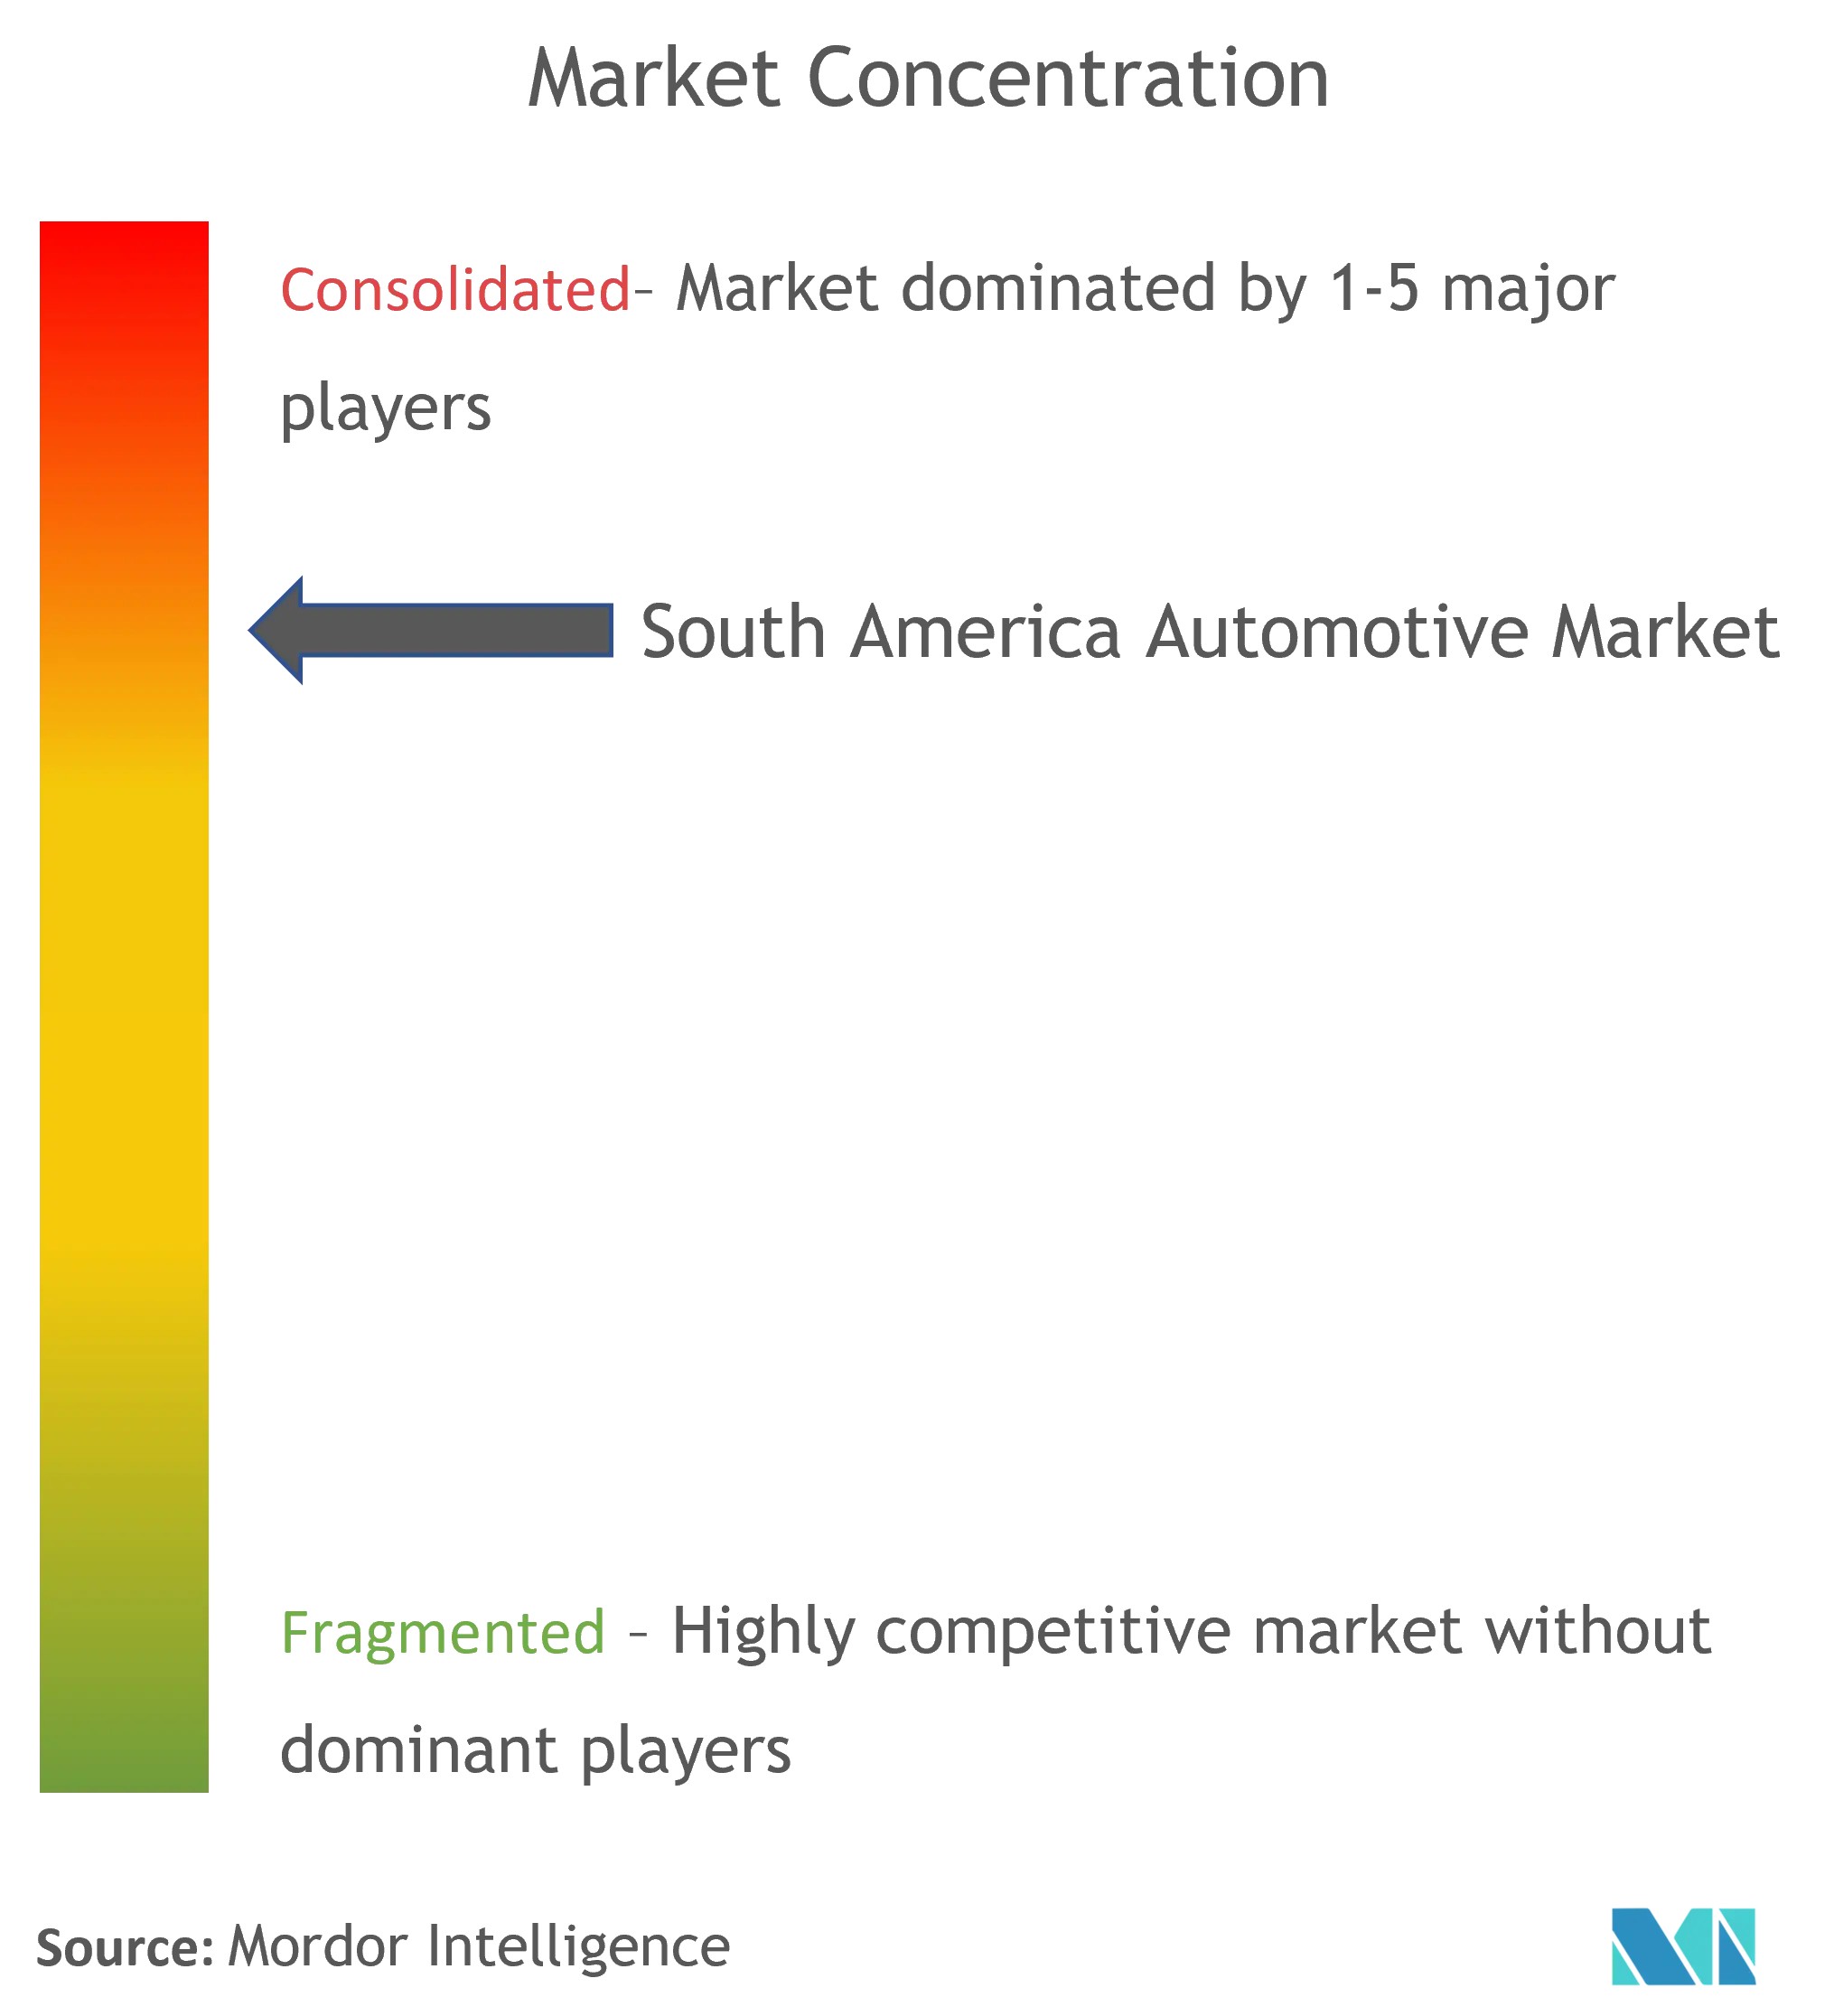 South America Automotive Market Concentration